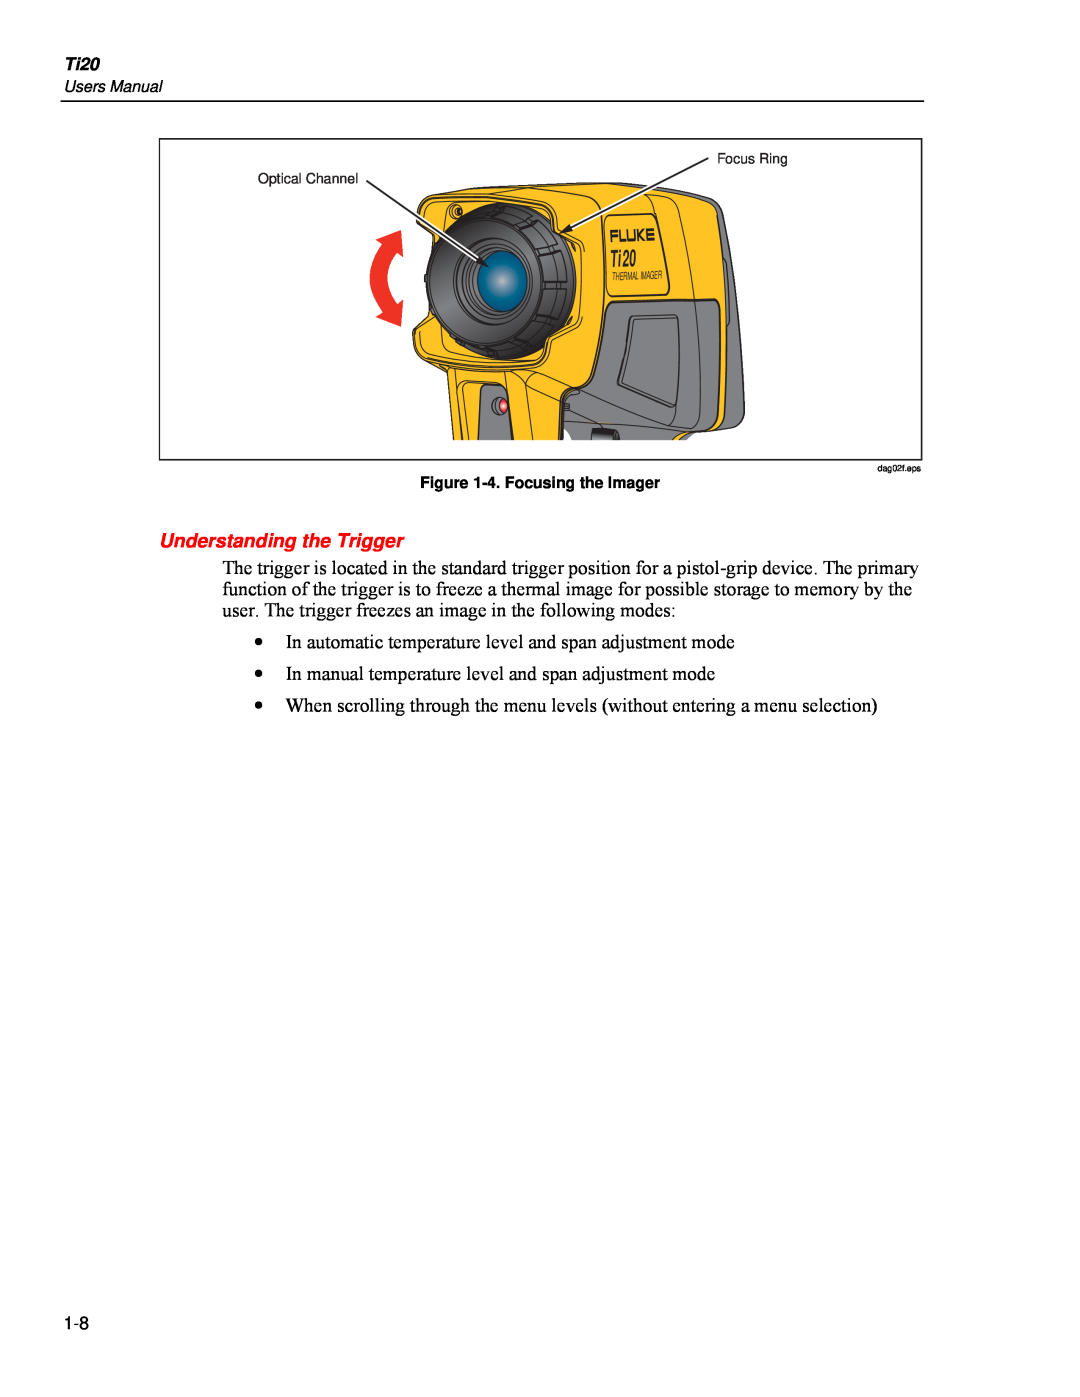 Fluke Ti20 user manual Understanding the Trigger 